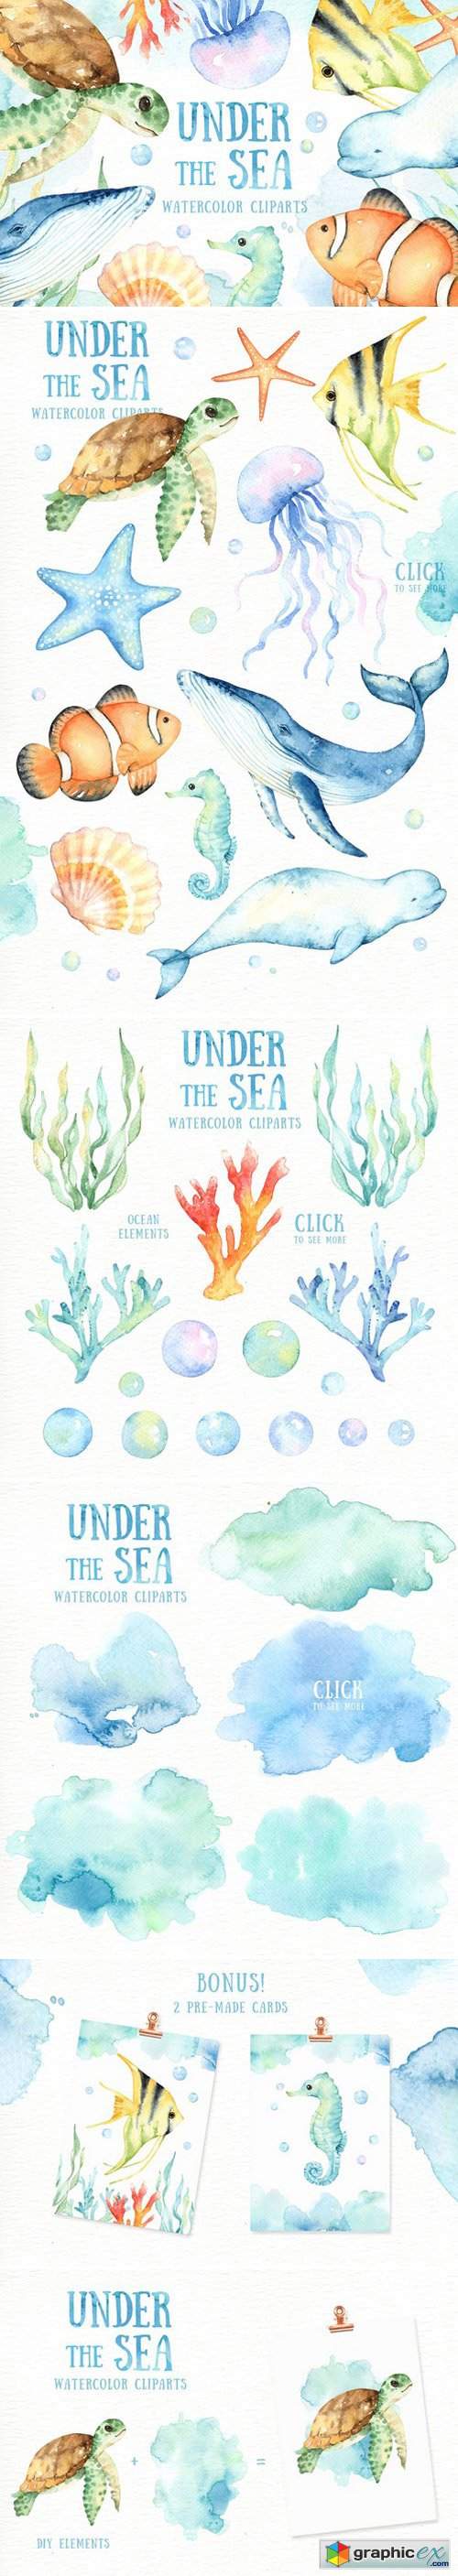 Under the Sea Watercolor Cliparts